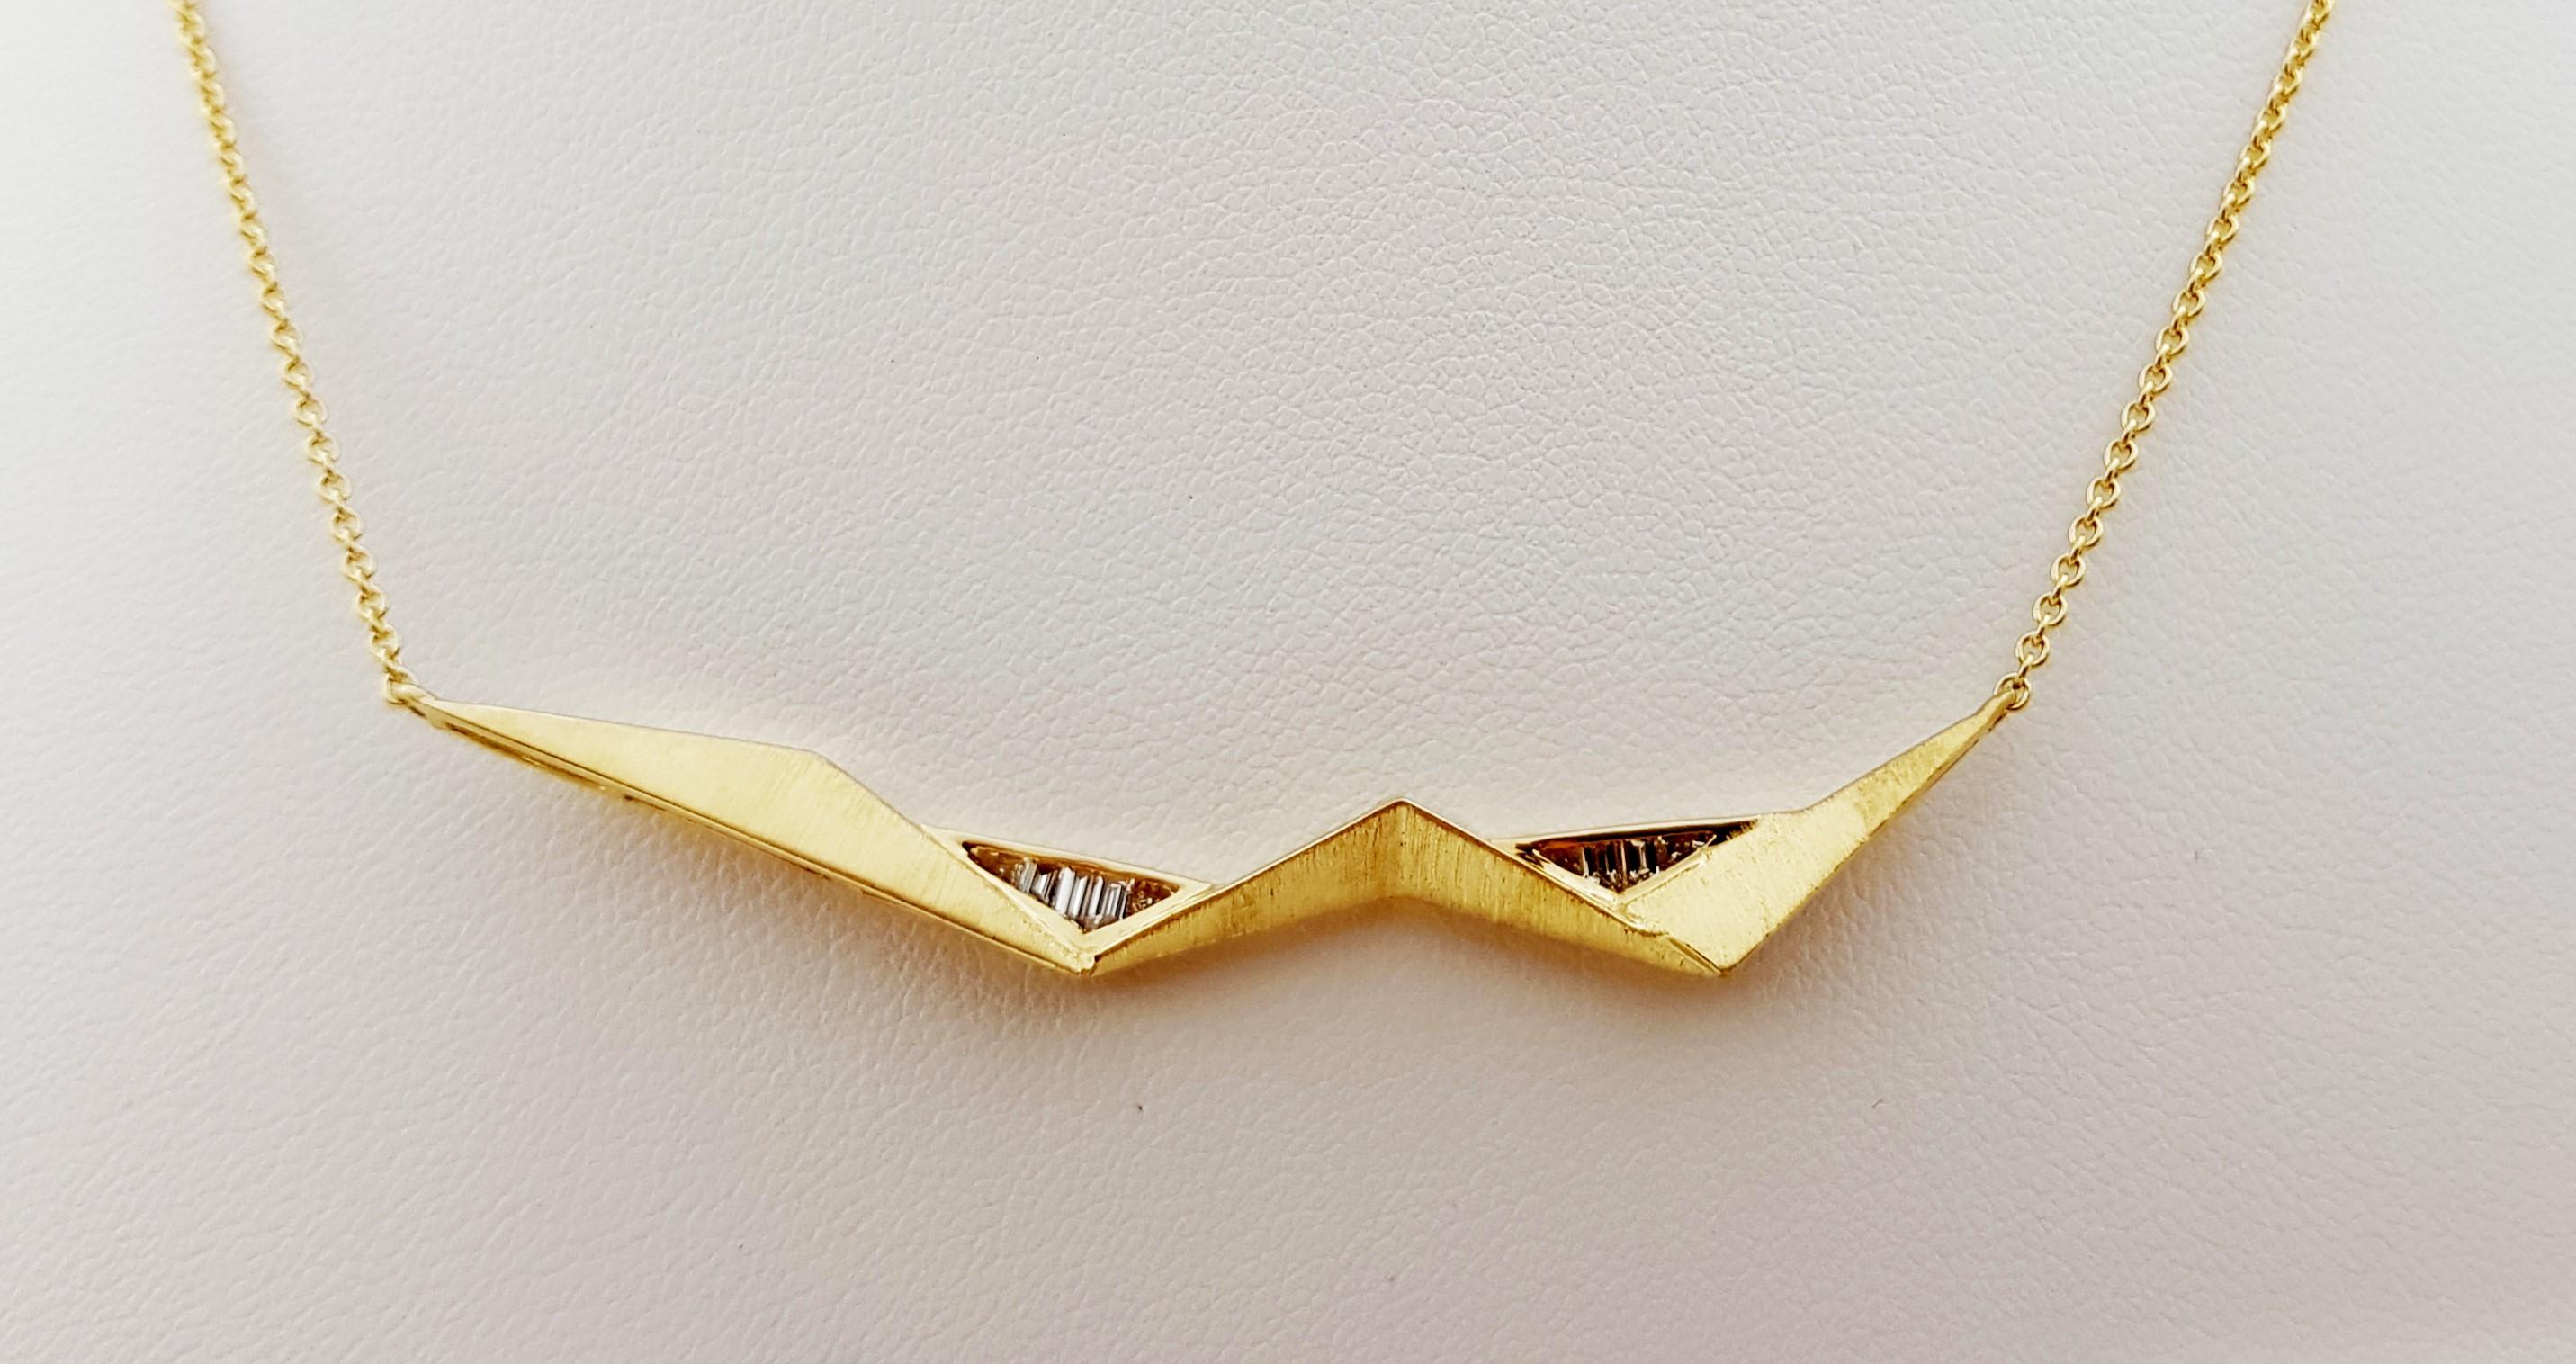 Diamond 0.38 carat Necklace set in 18 Karat Gold Settings by Kavant & Sharart

Width: 1.3 cm 
Length: 46.0 cm
Total Weight: 6.50 grams

